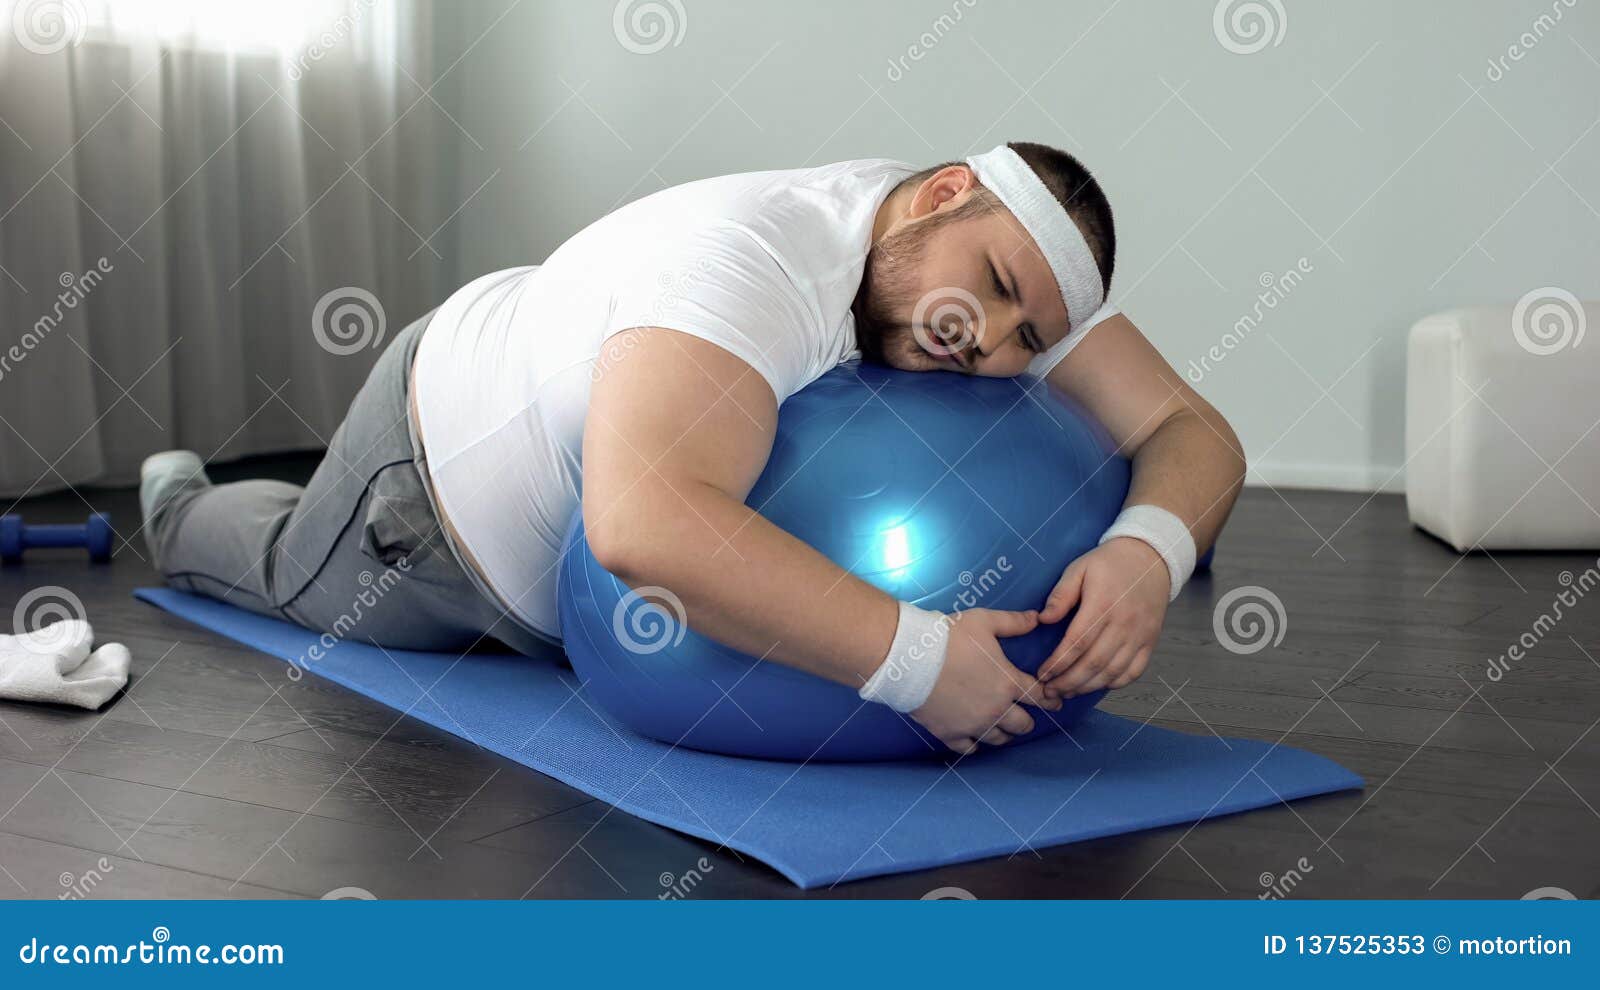 weak-willed fat man relaxing on fitness ball, home workout break, laziness